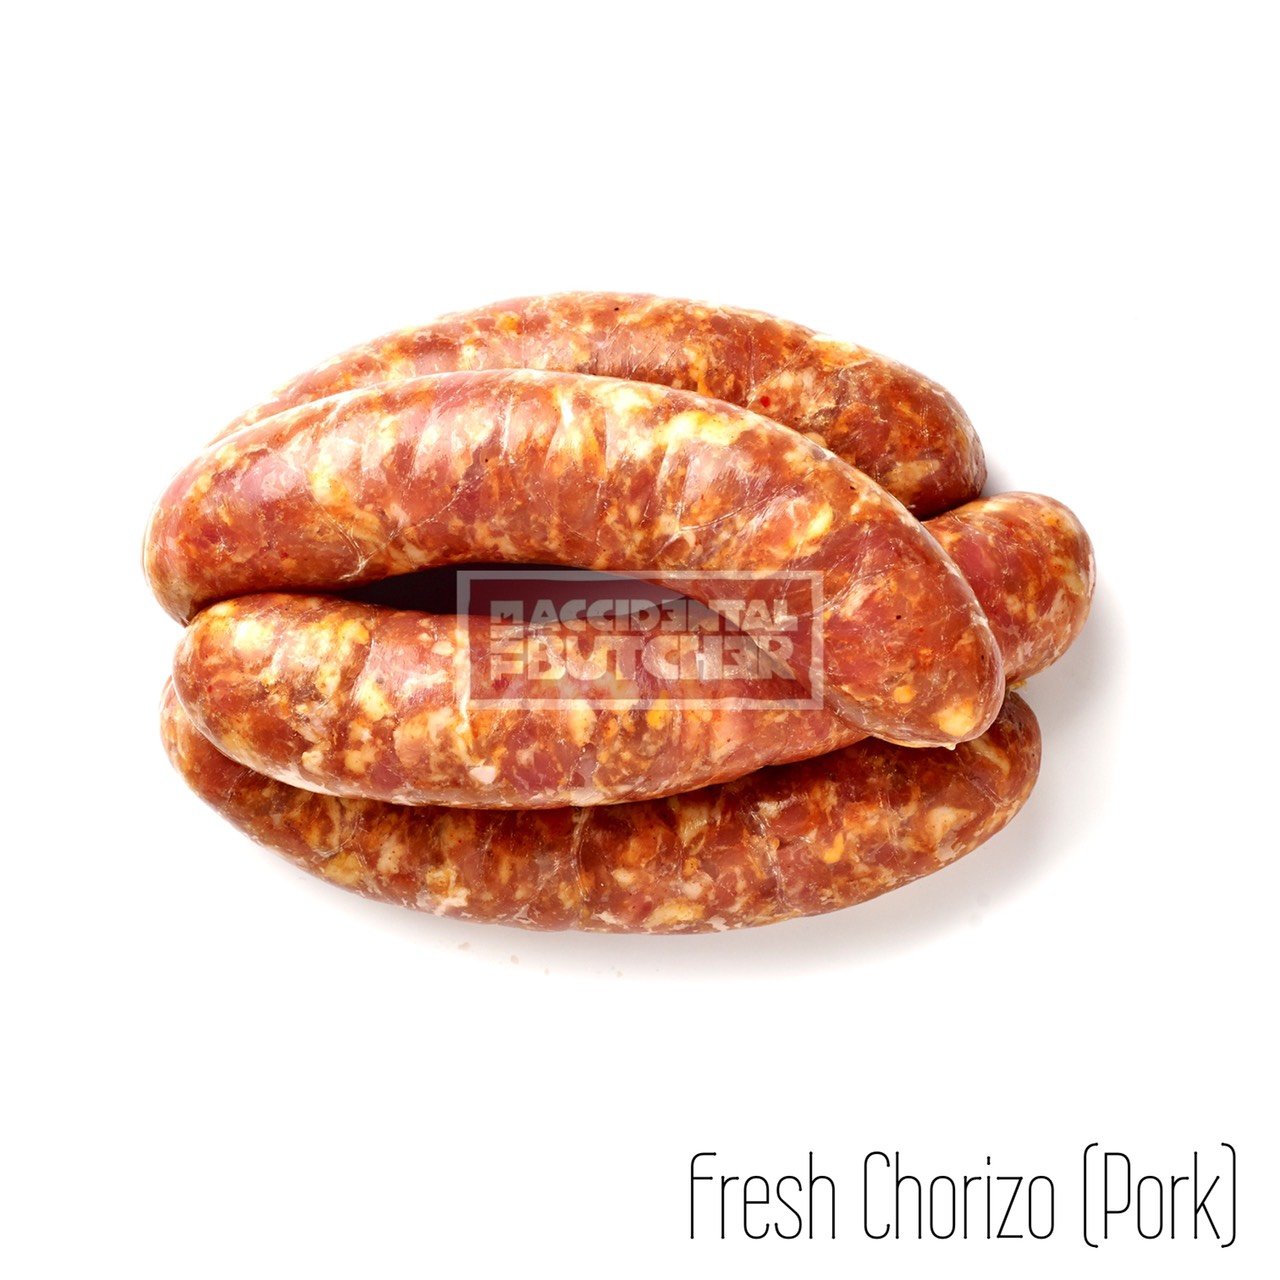 Frozen Chorizo Pork Sausage.